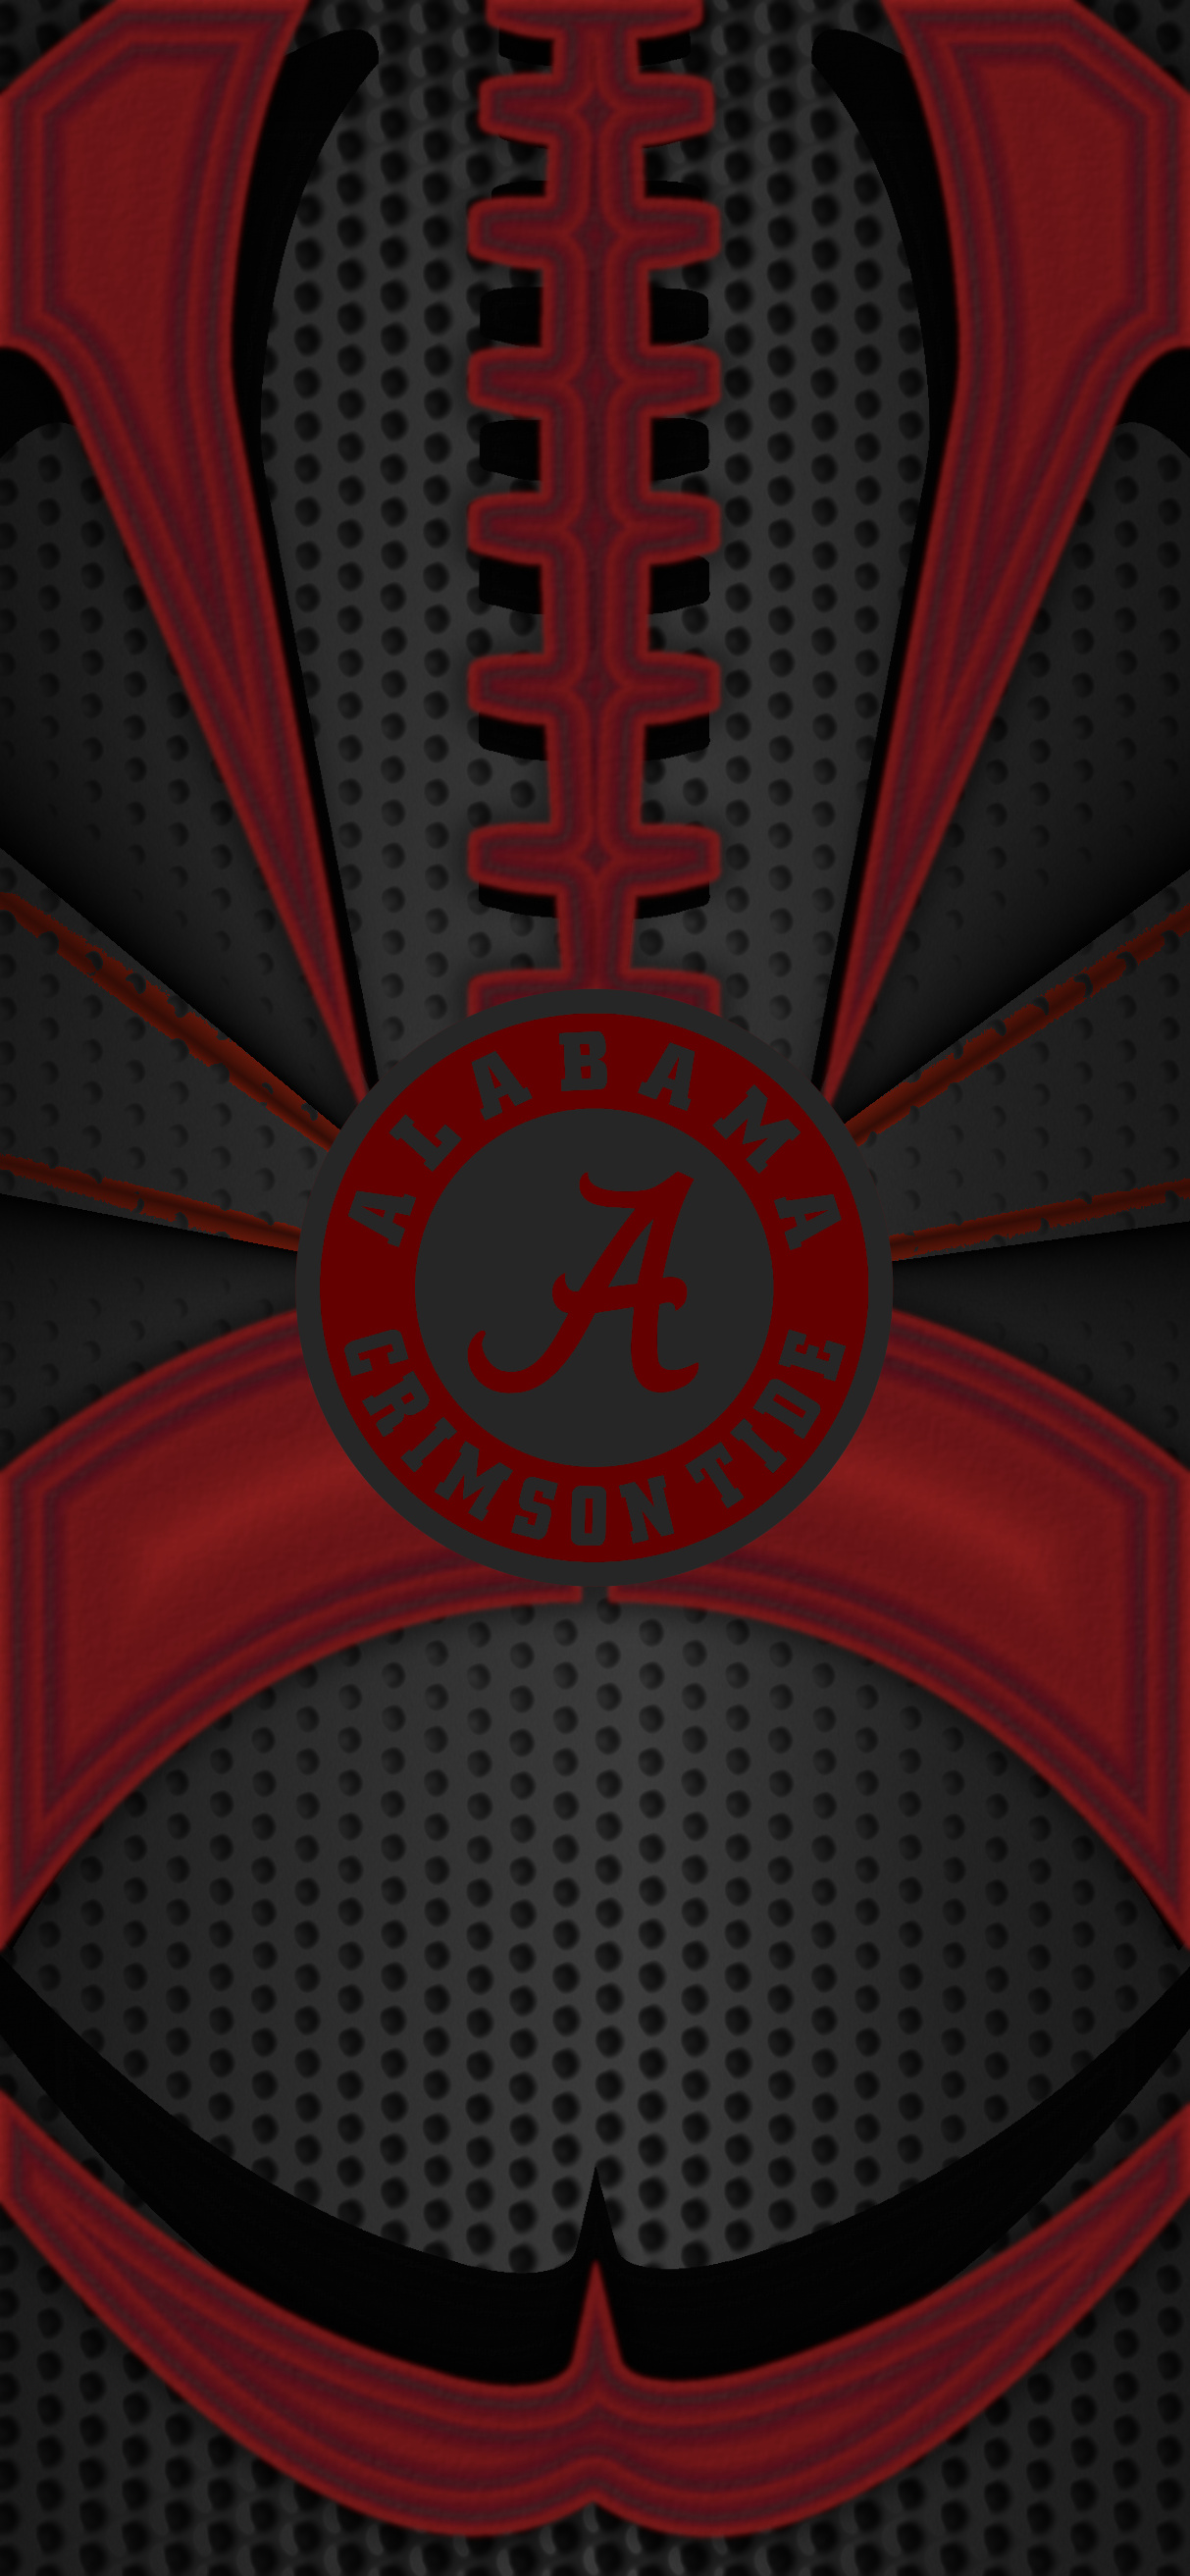 Alabama crimson tide football logo, iPhone wallpaper, Alabama travels, school pride, 1220x2630 HD Handy